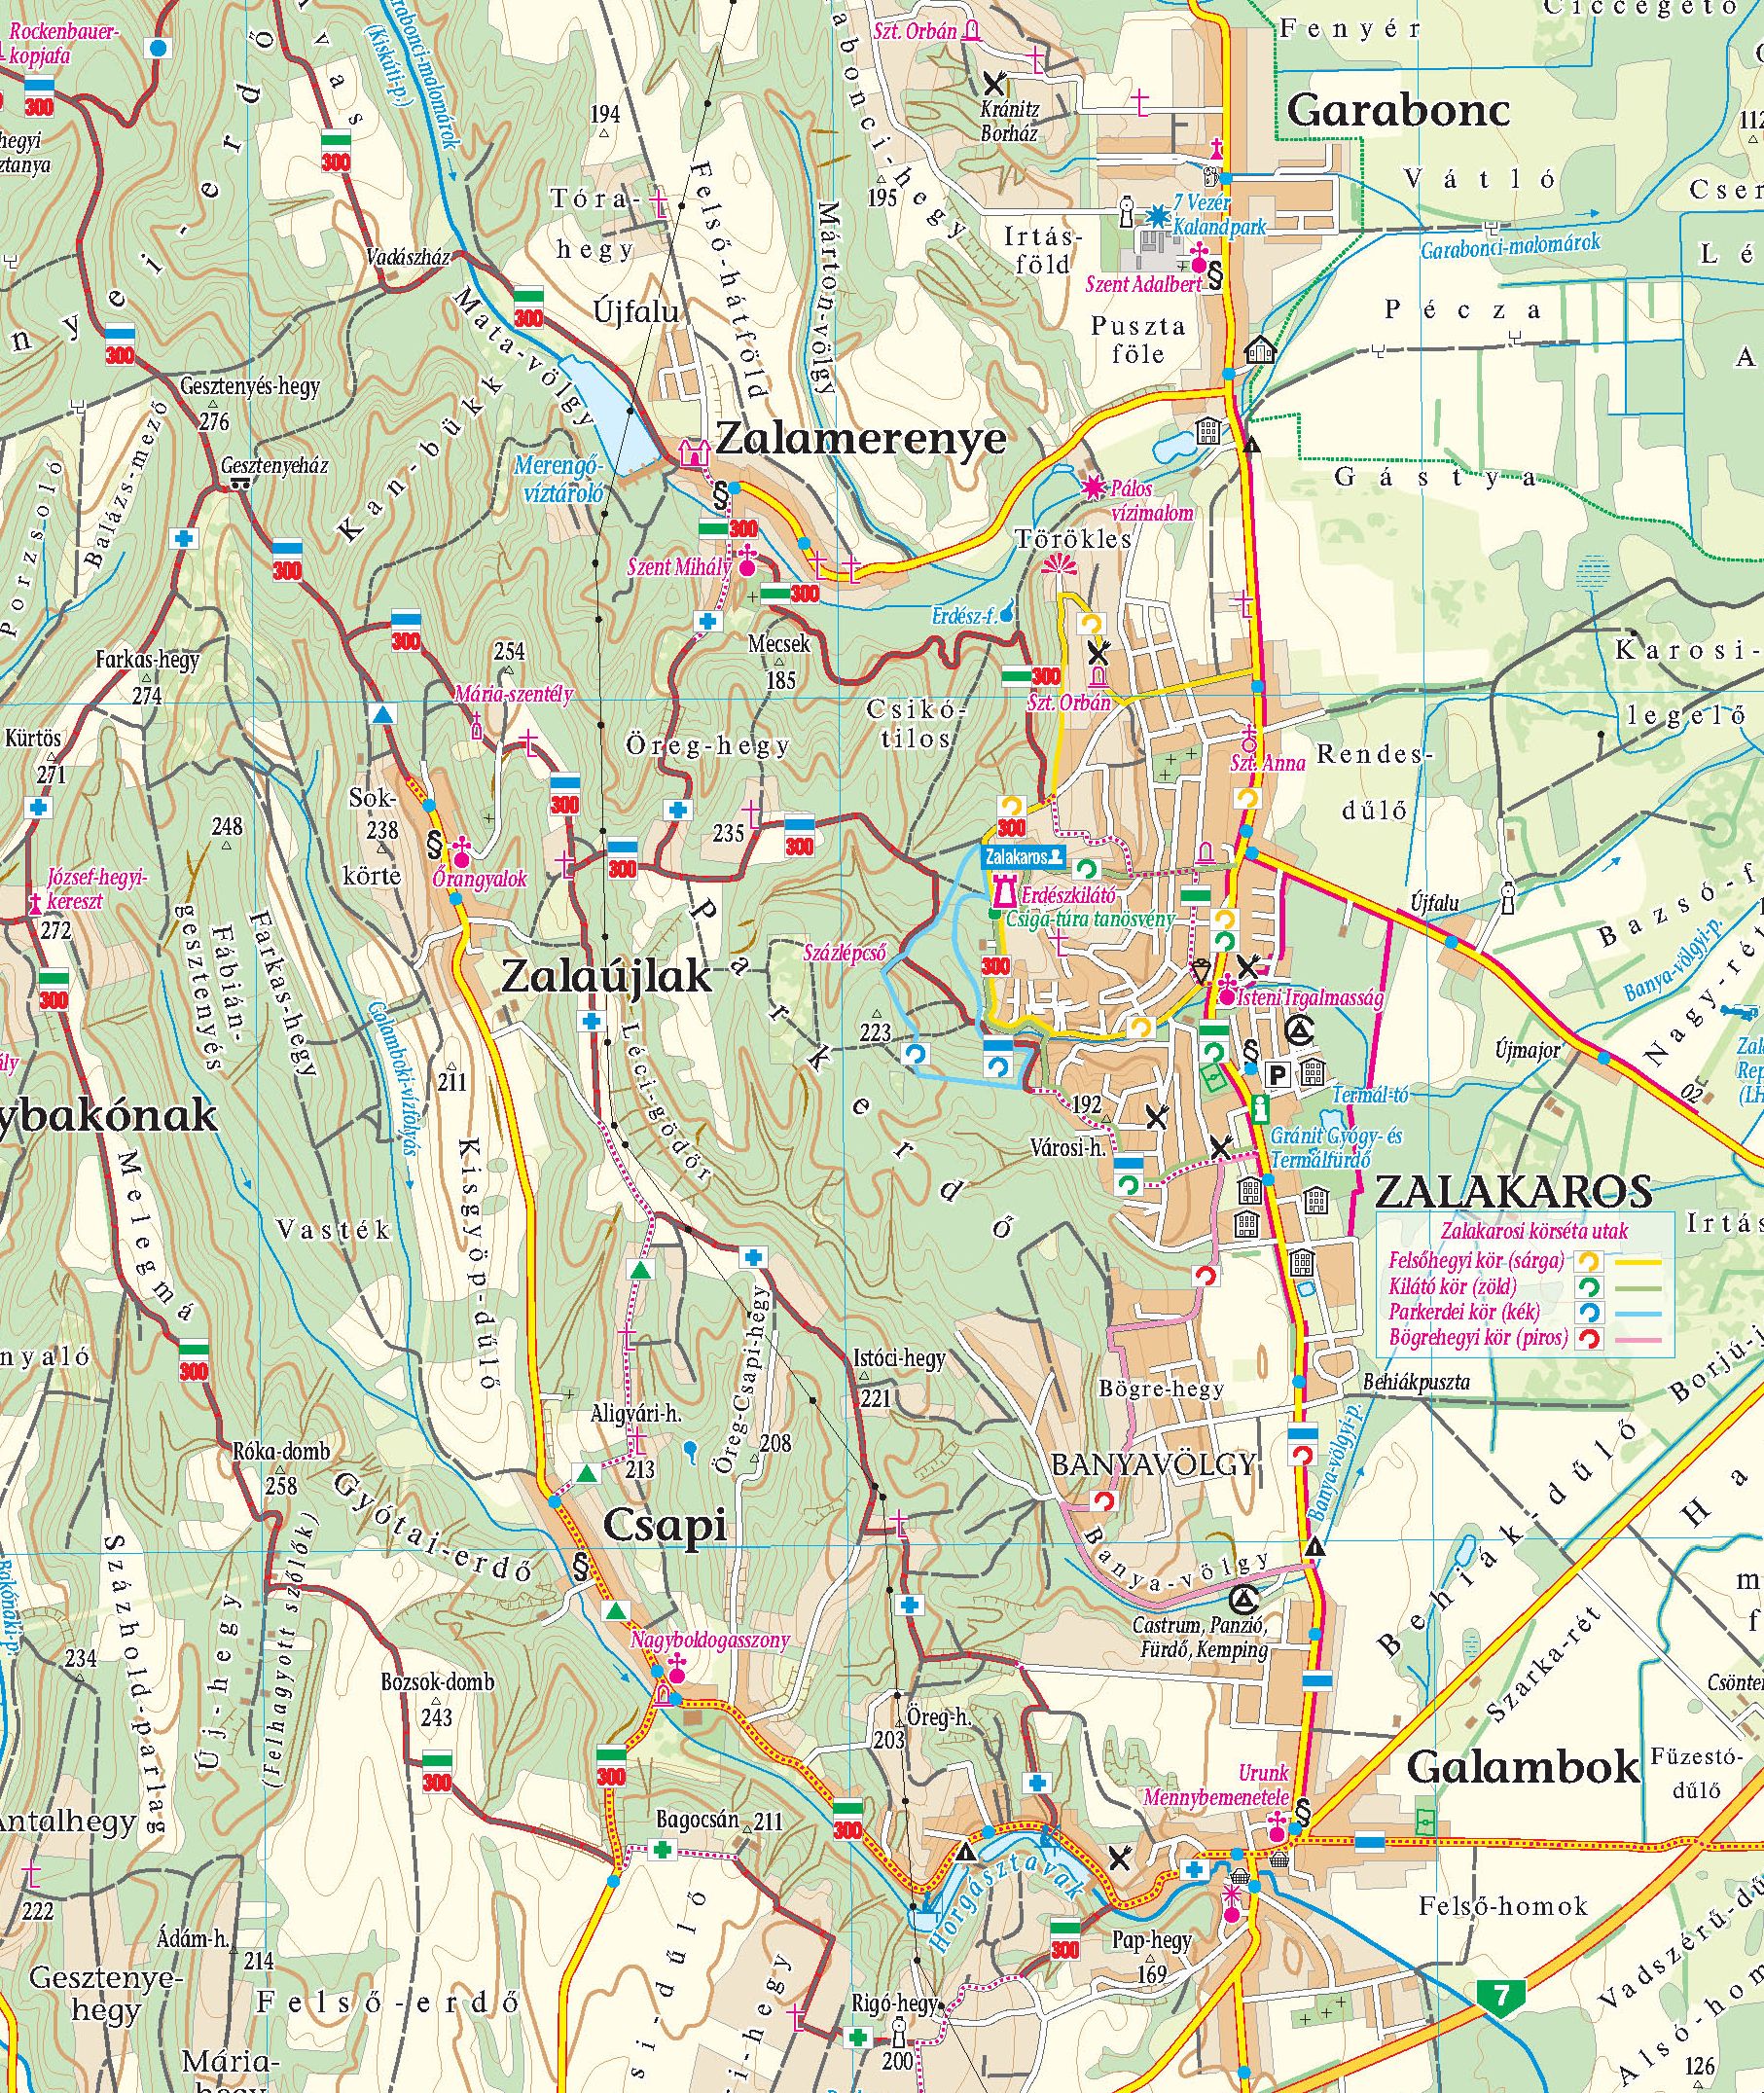 Zala-hills (South) sample map 1:50.000